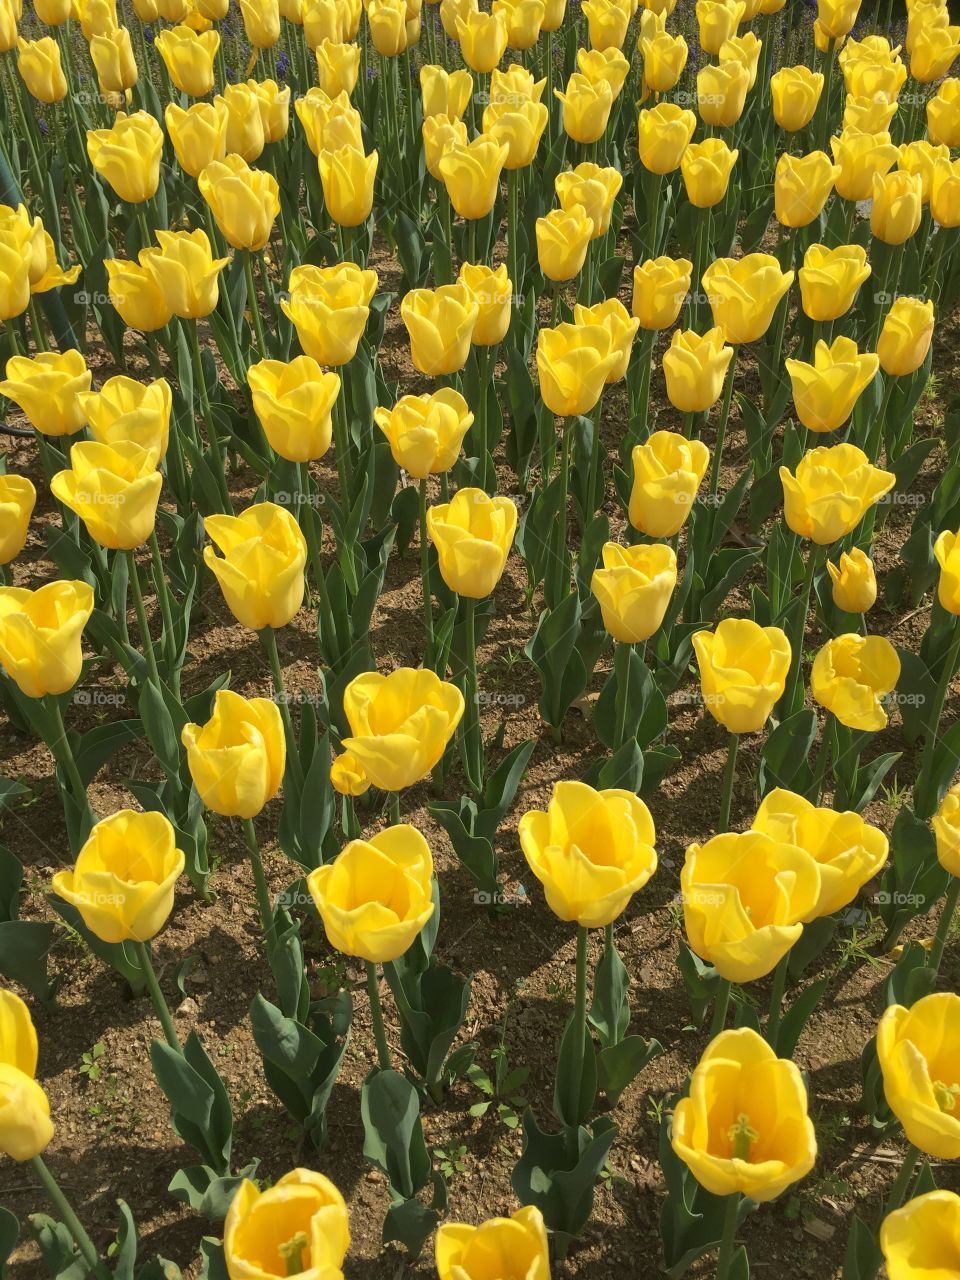 Field of Yellow